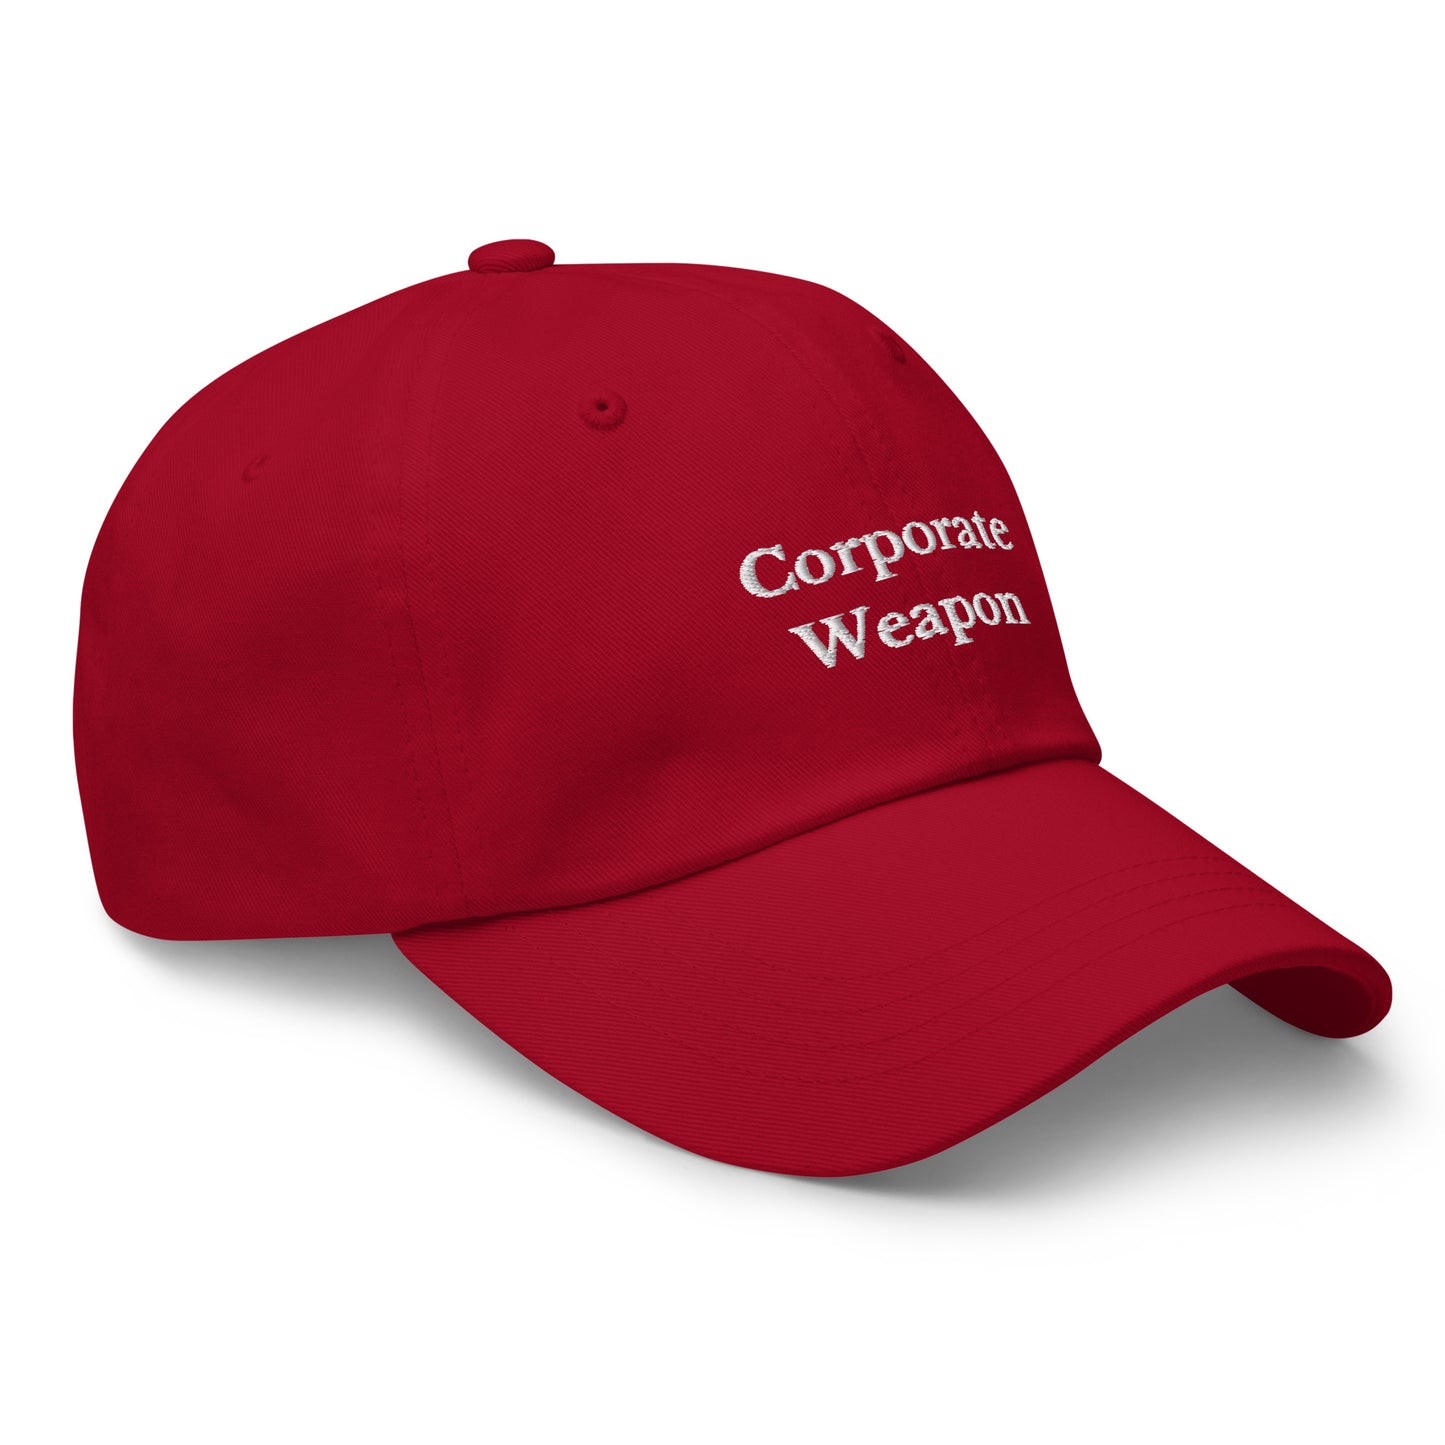 Corporate Weapon Cap